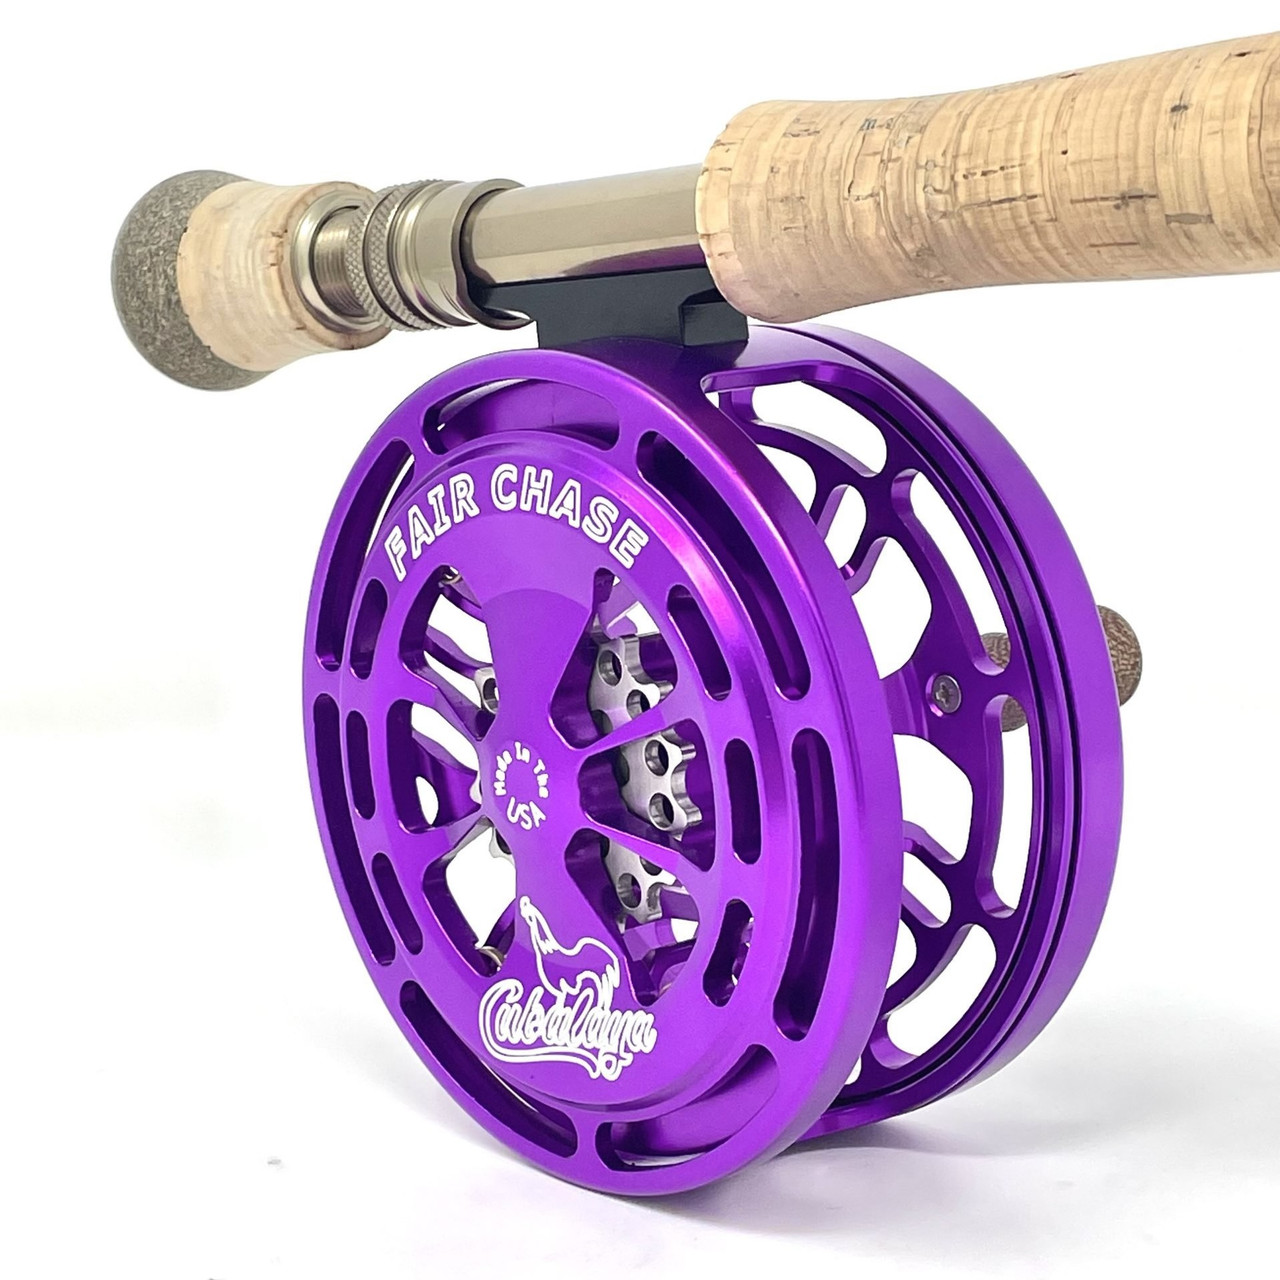 Ready for the Purple ESD fly reel? www.taylorflyfishing.com